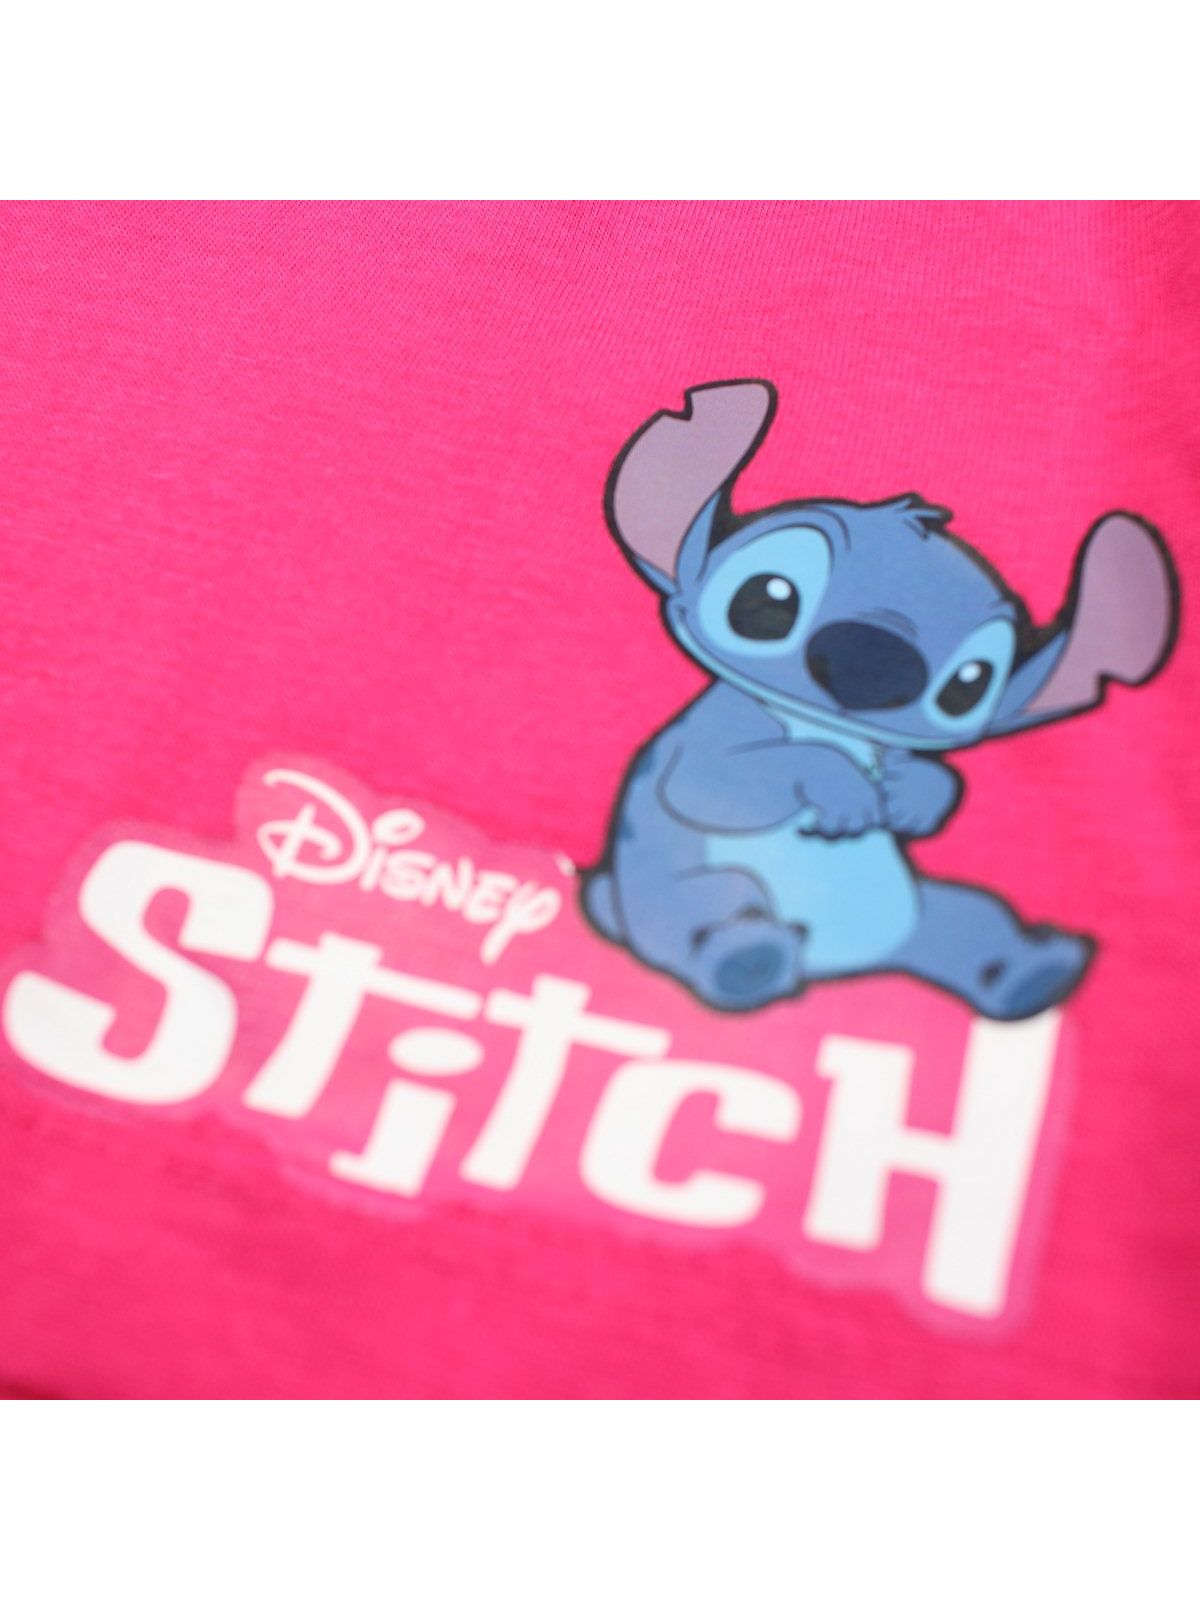 Lilo & stitch set.